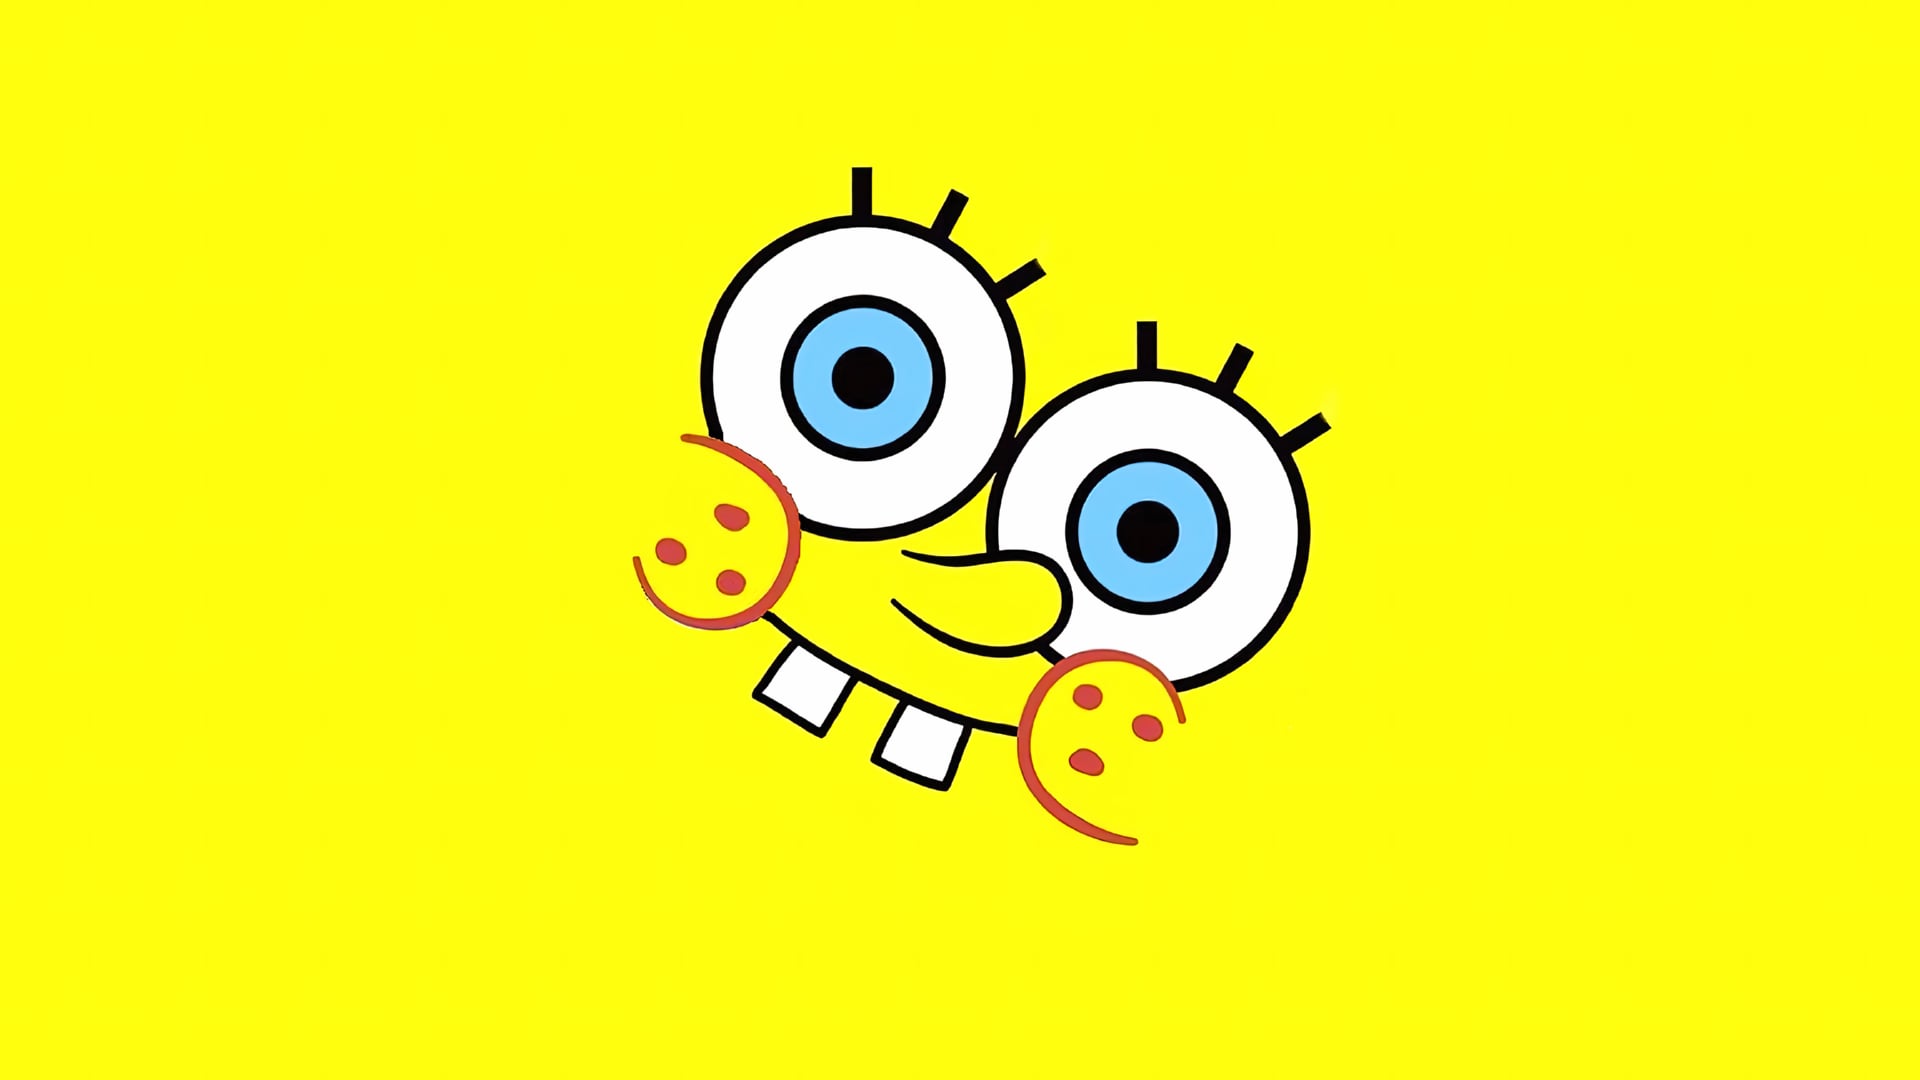 Digital Art SpongeBob SquarePants at 1334 x 750 iPhone 7 size wallpapers HD quality